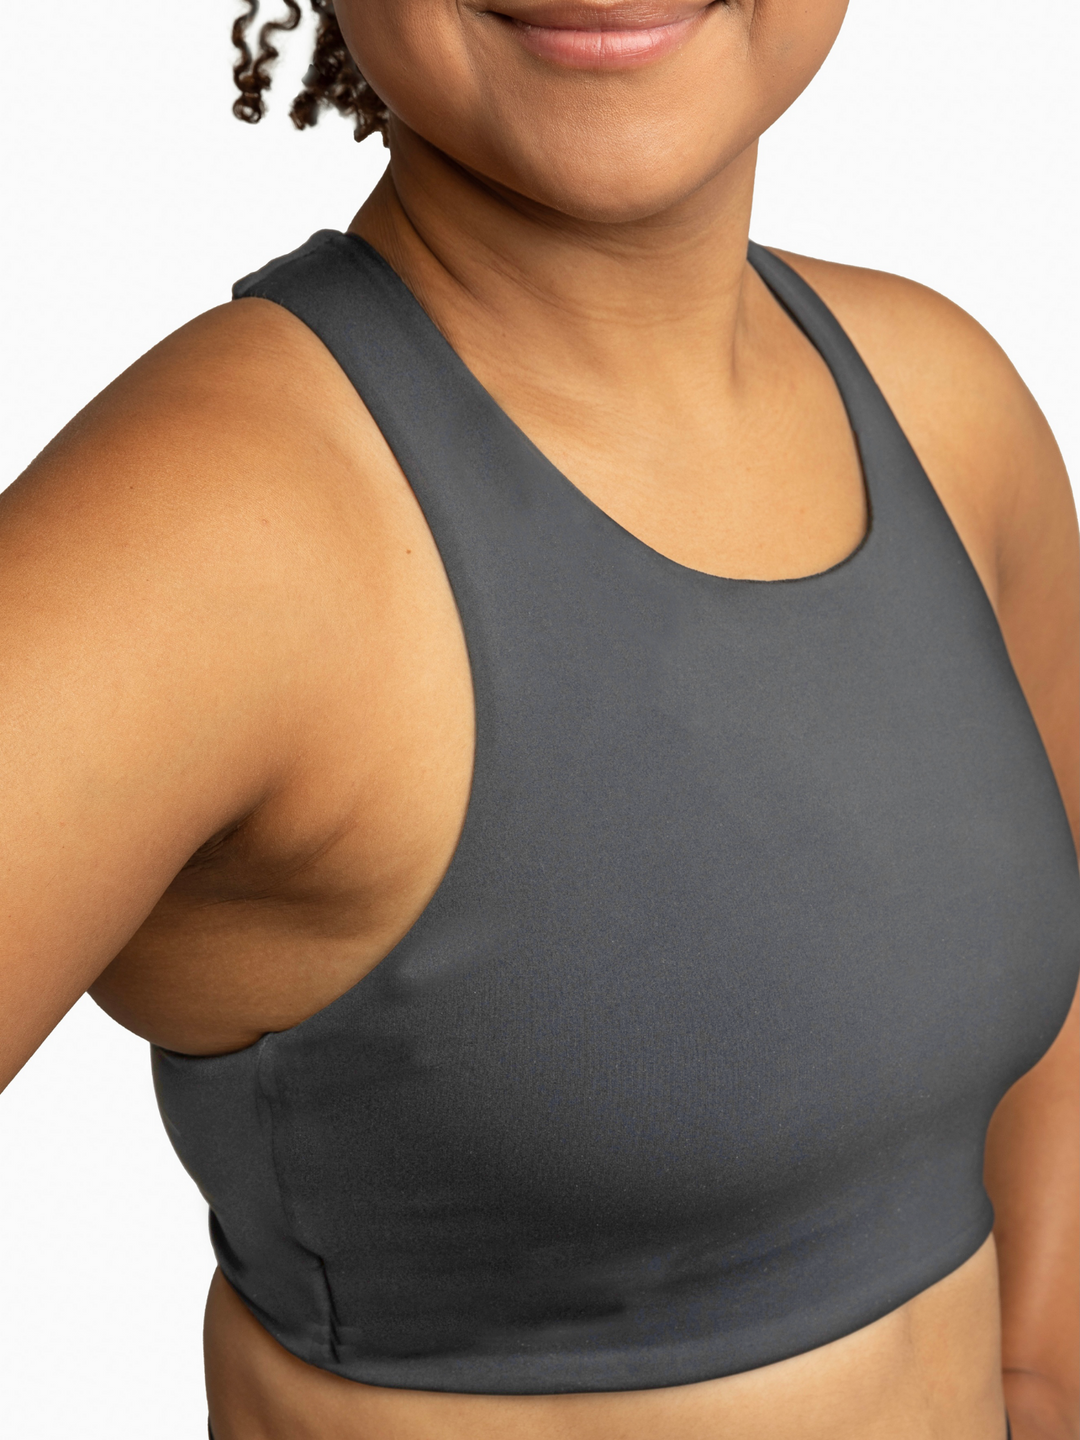 BIZNOTE: West Seattle women launch new type of sports bra for  nursing/pumping moms